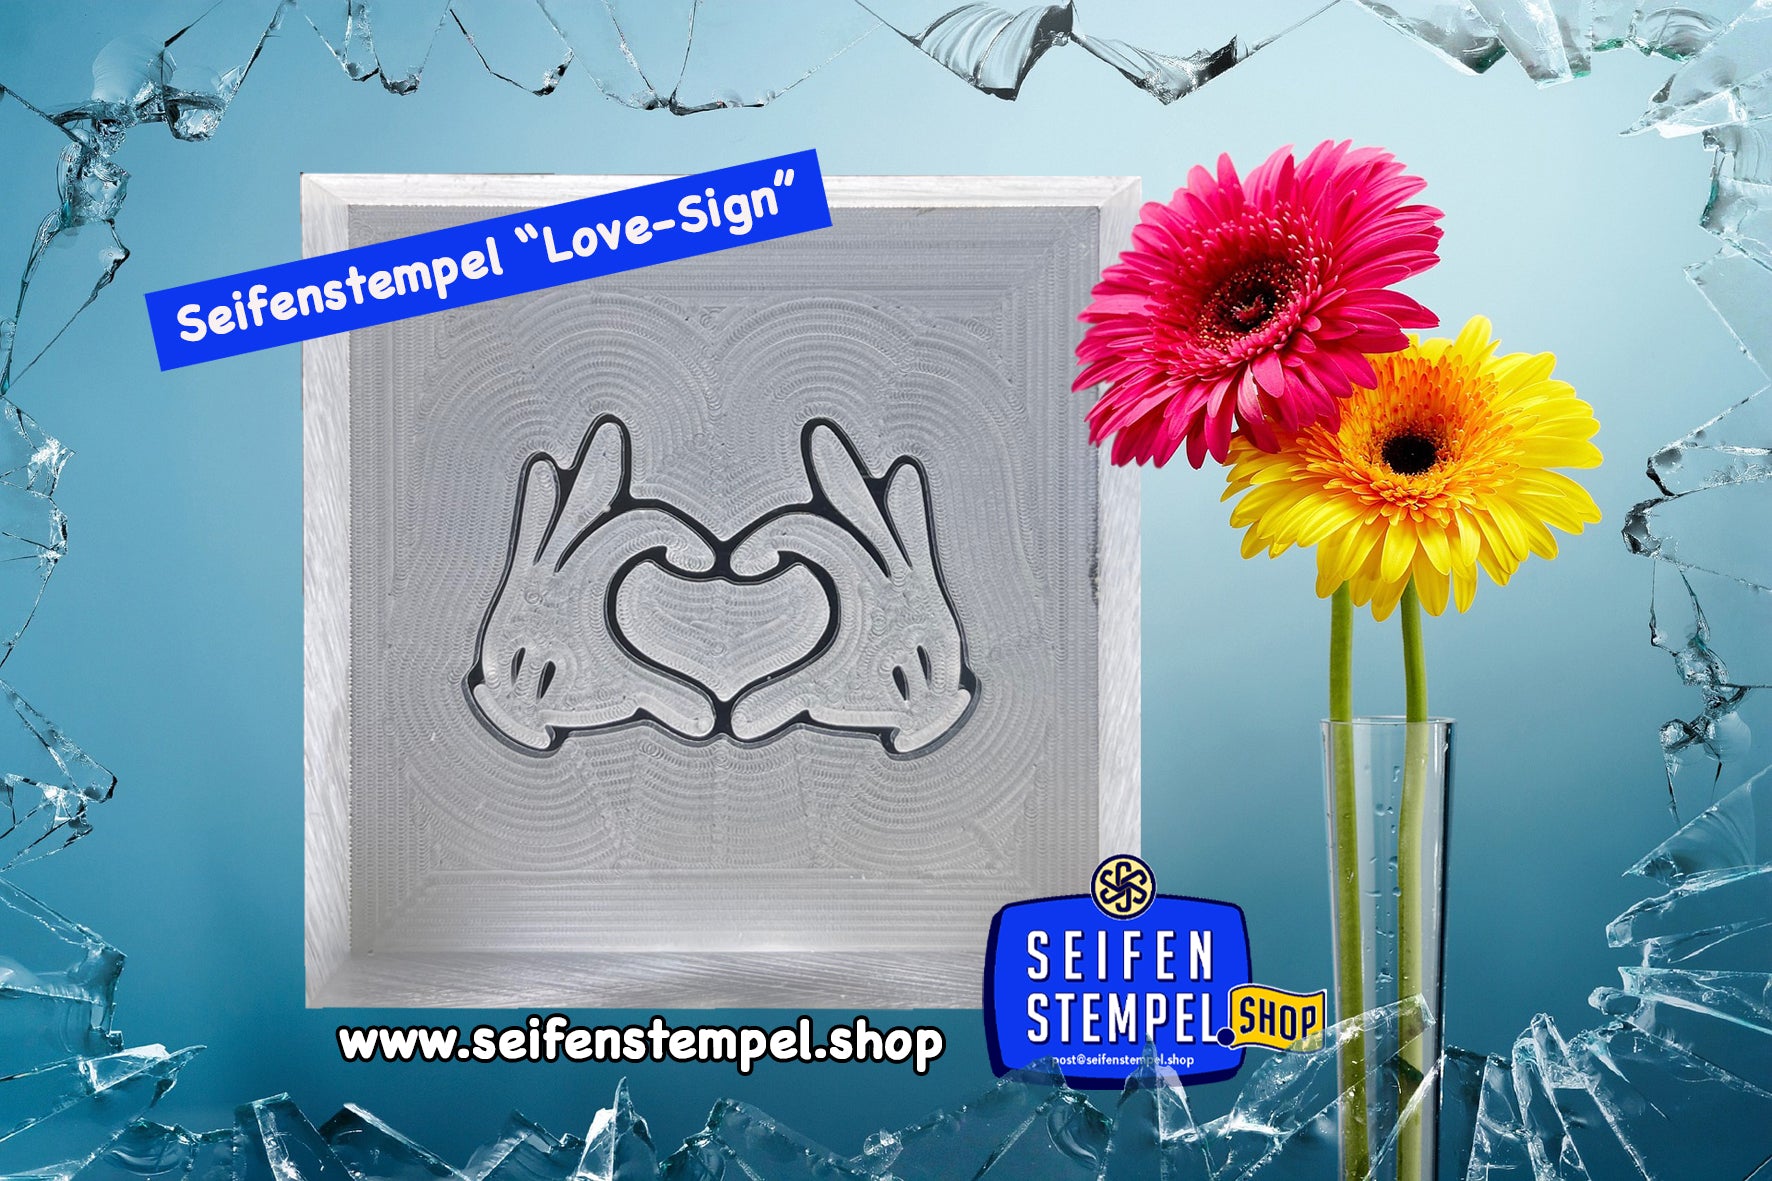 Seifenstempel "Love-Sign"